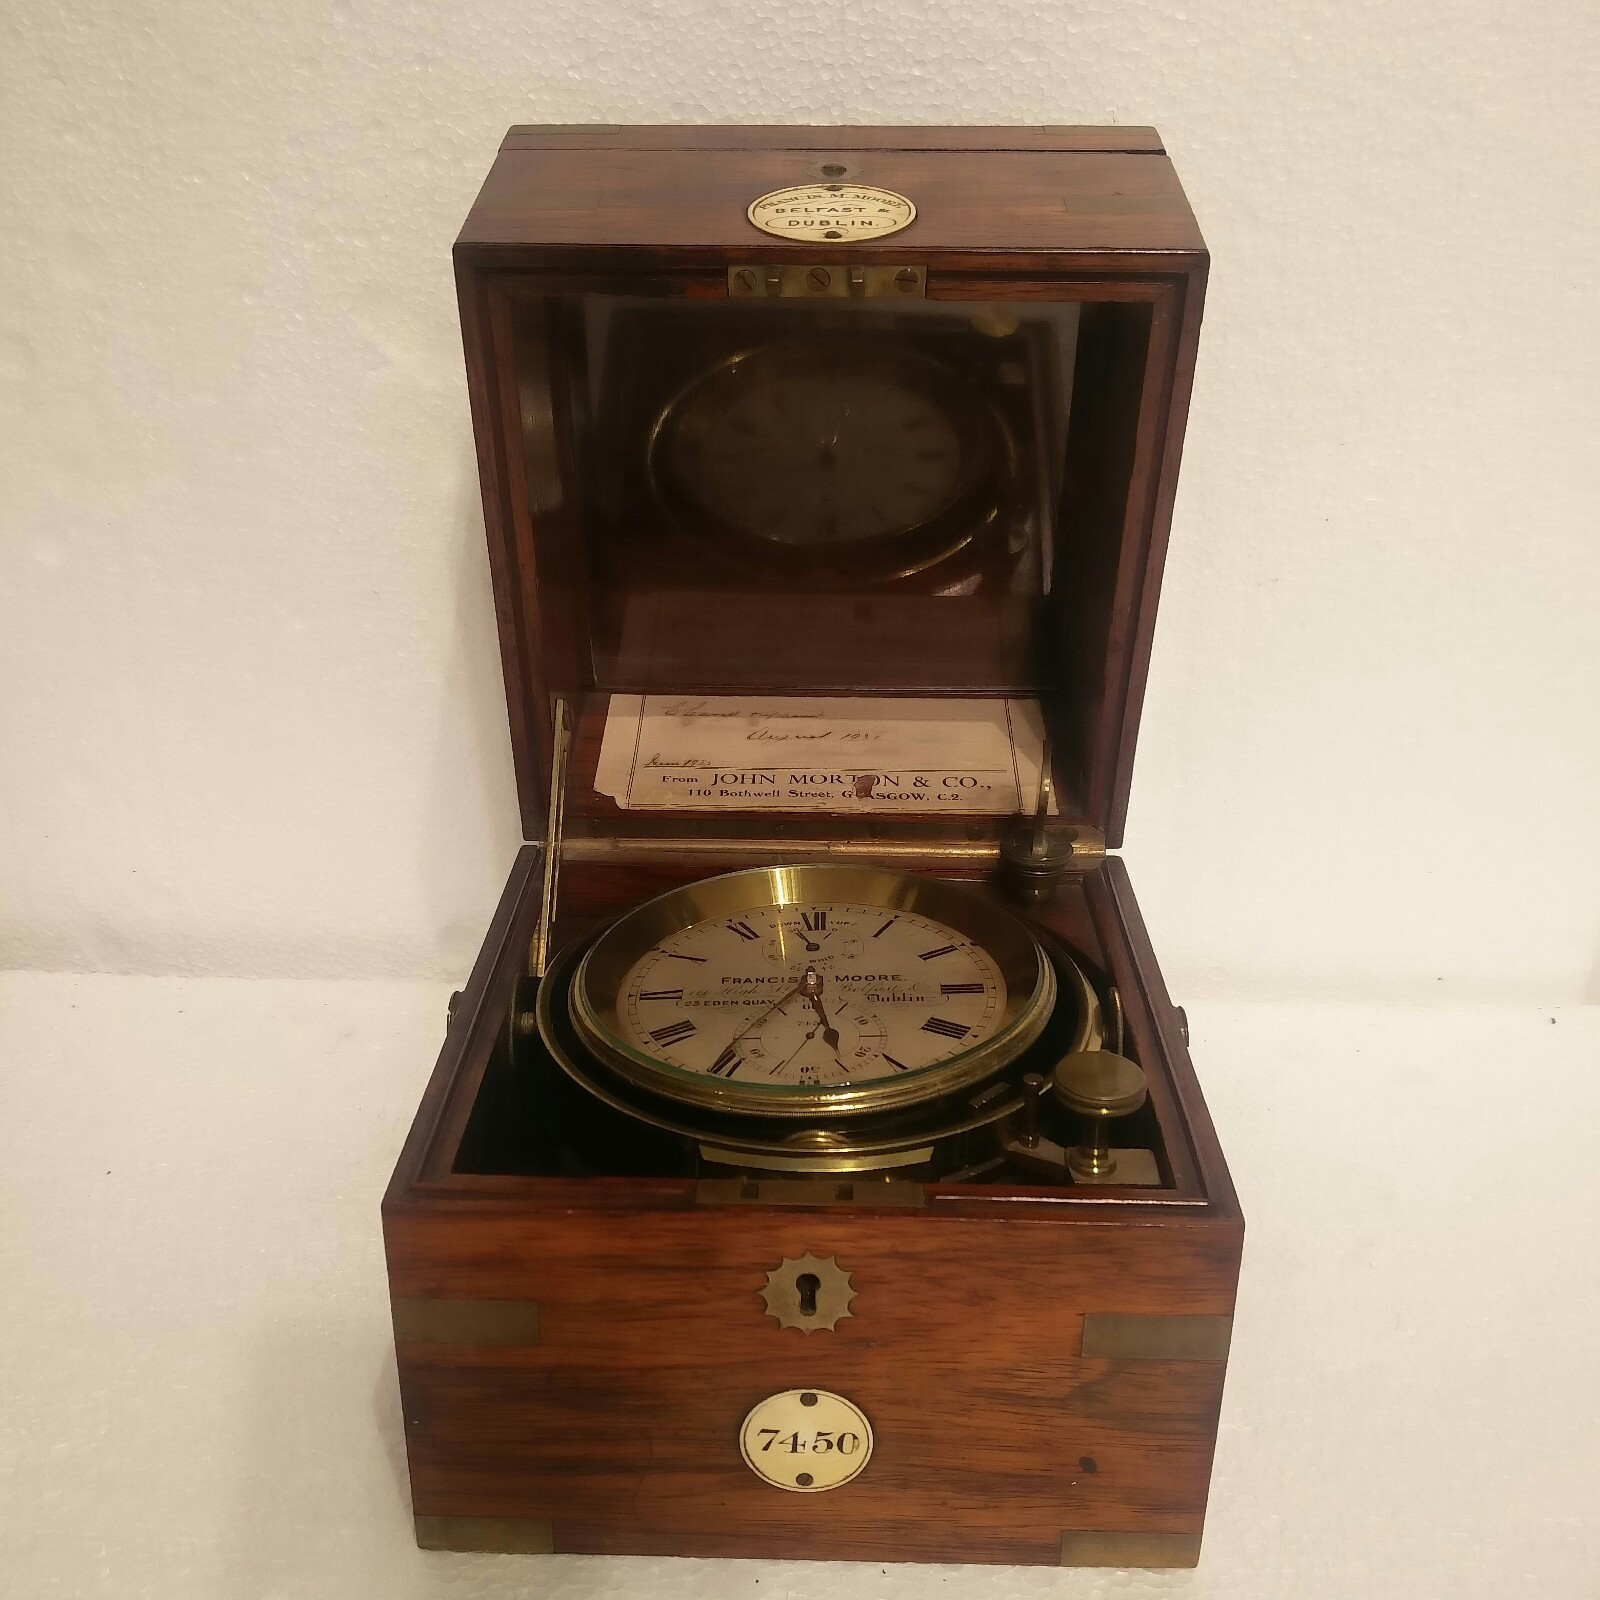 An antique marine chronometer